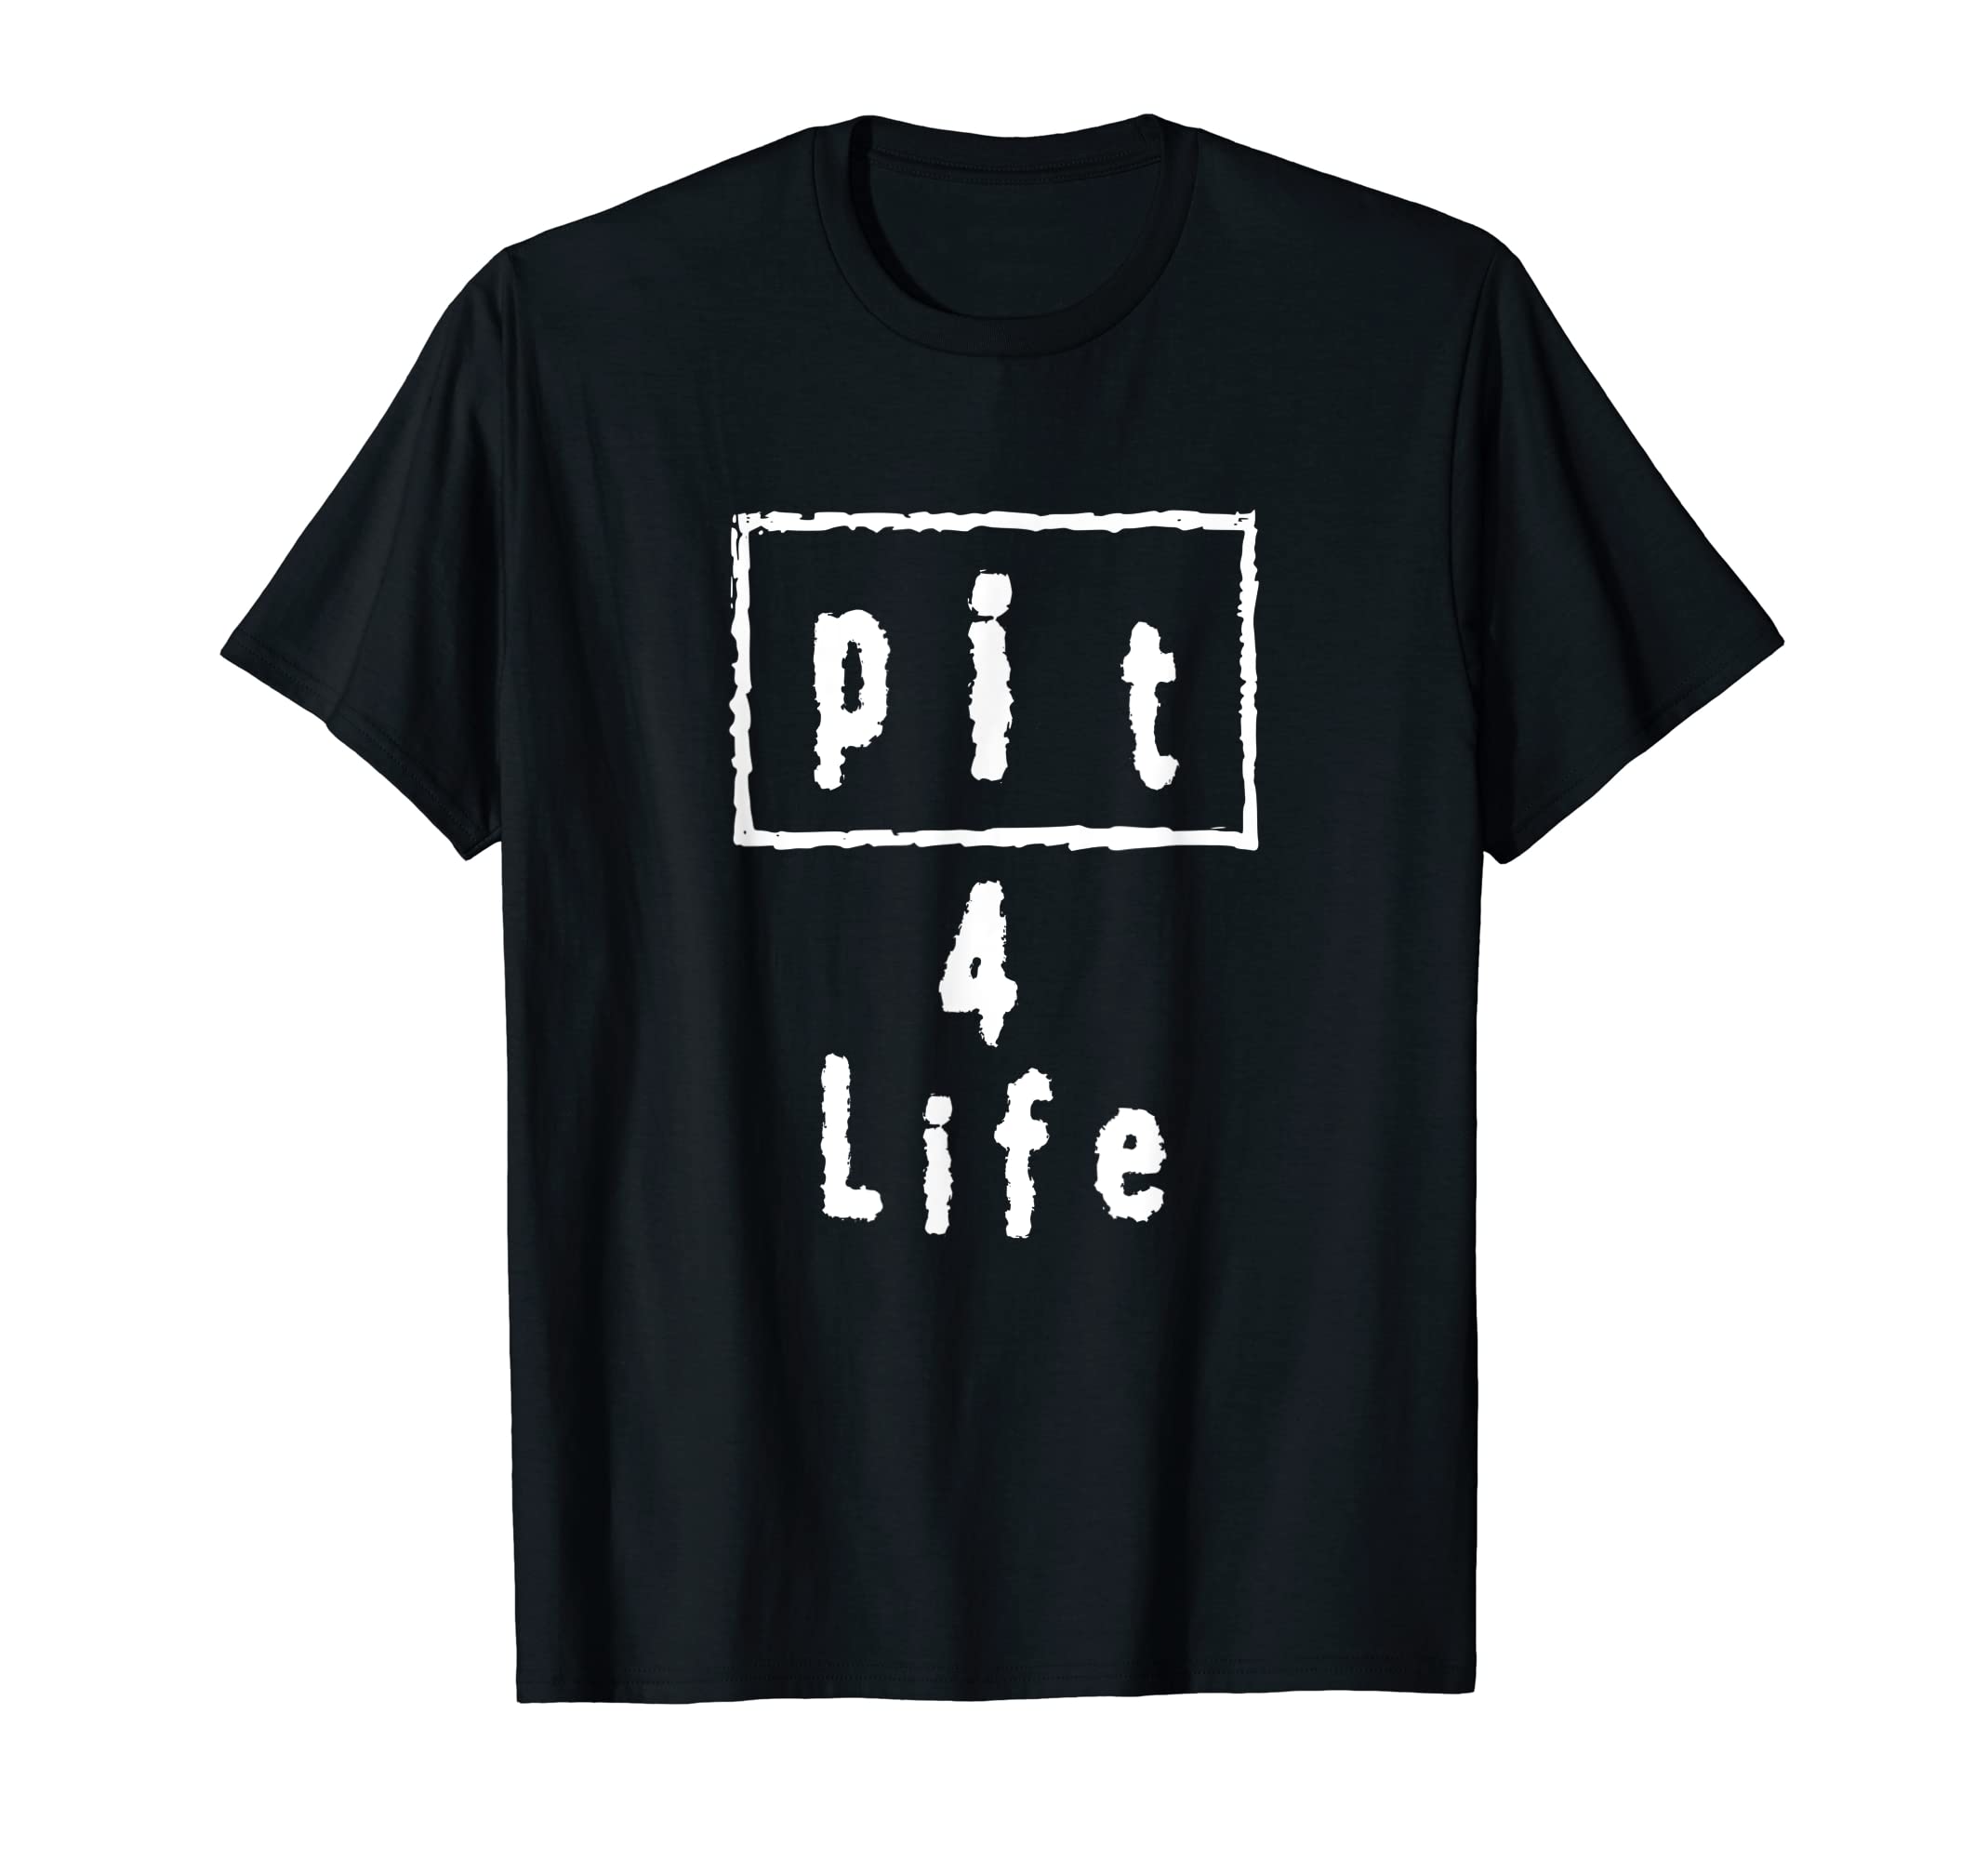 Pittsburgh Football World Order 4 Life (Shirts & More)